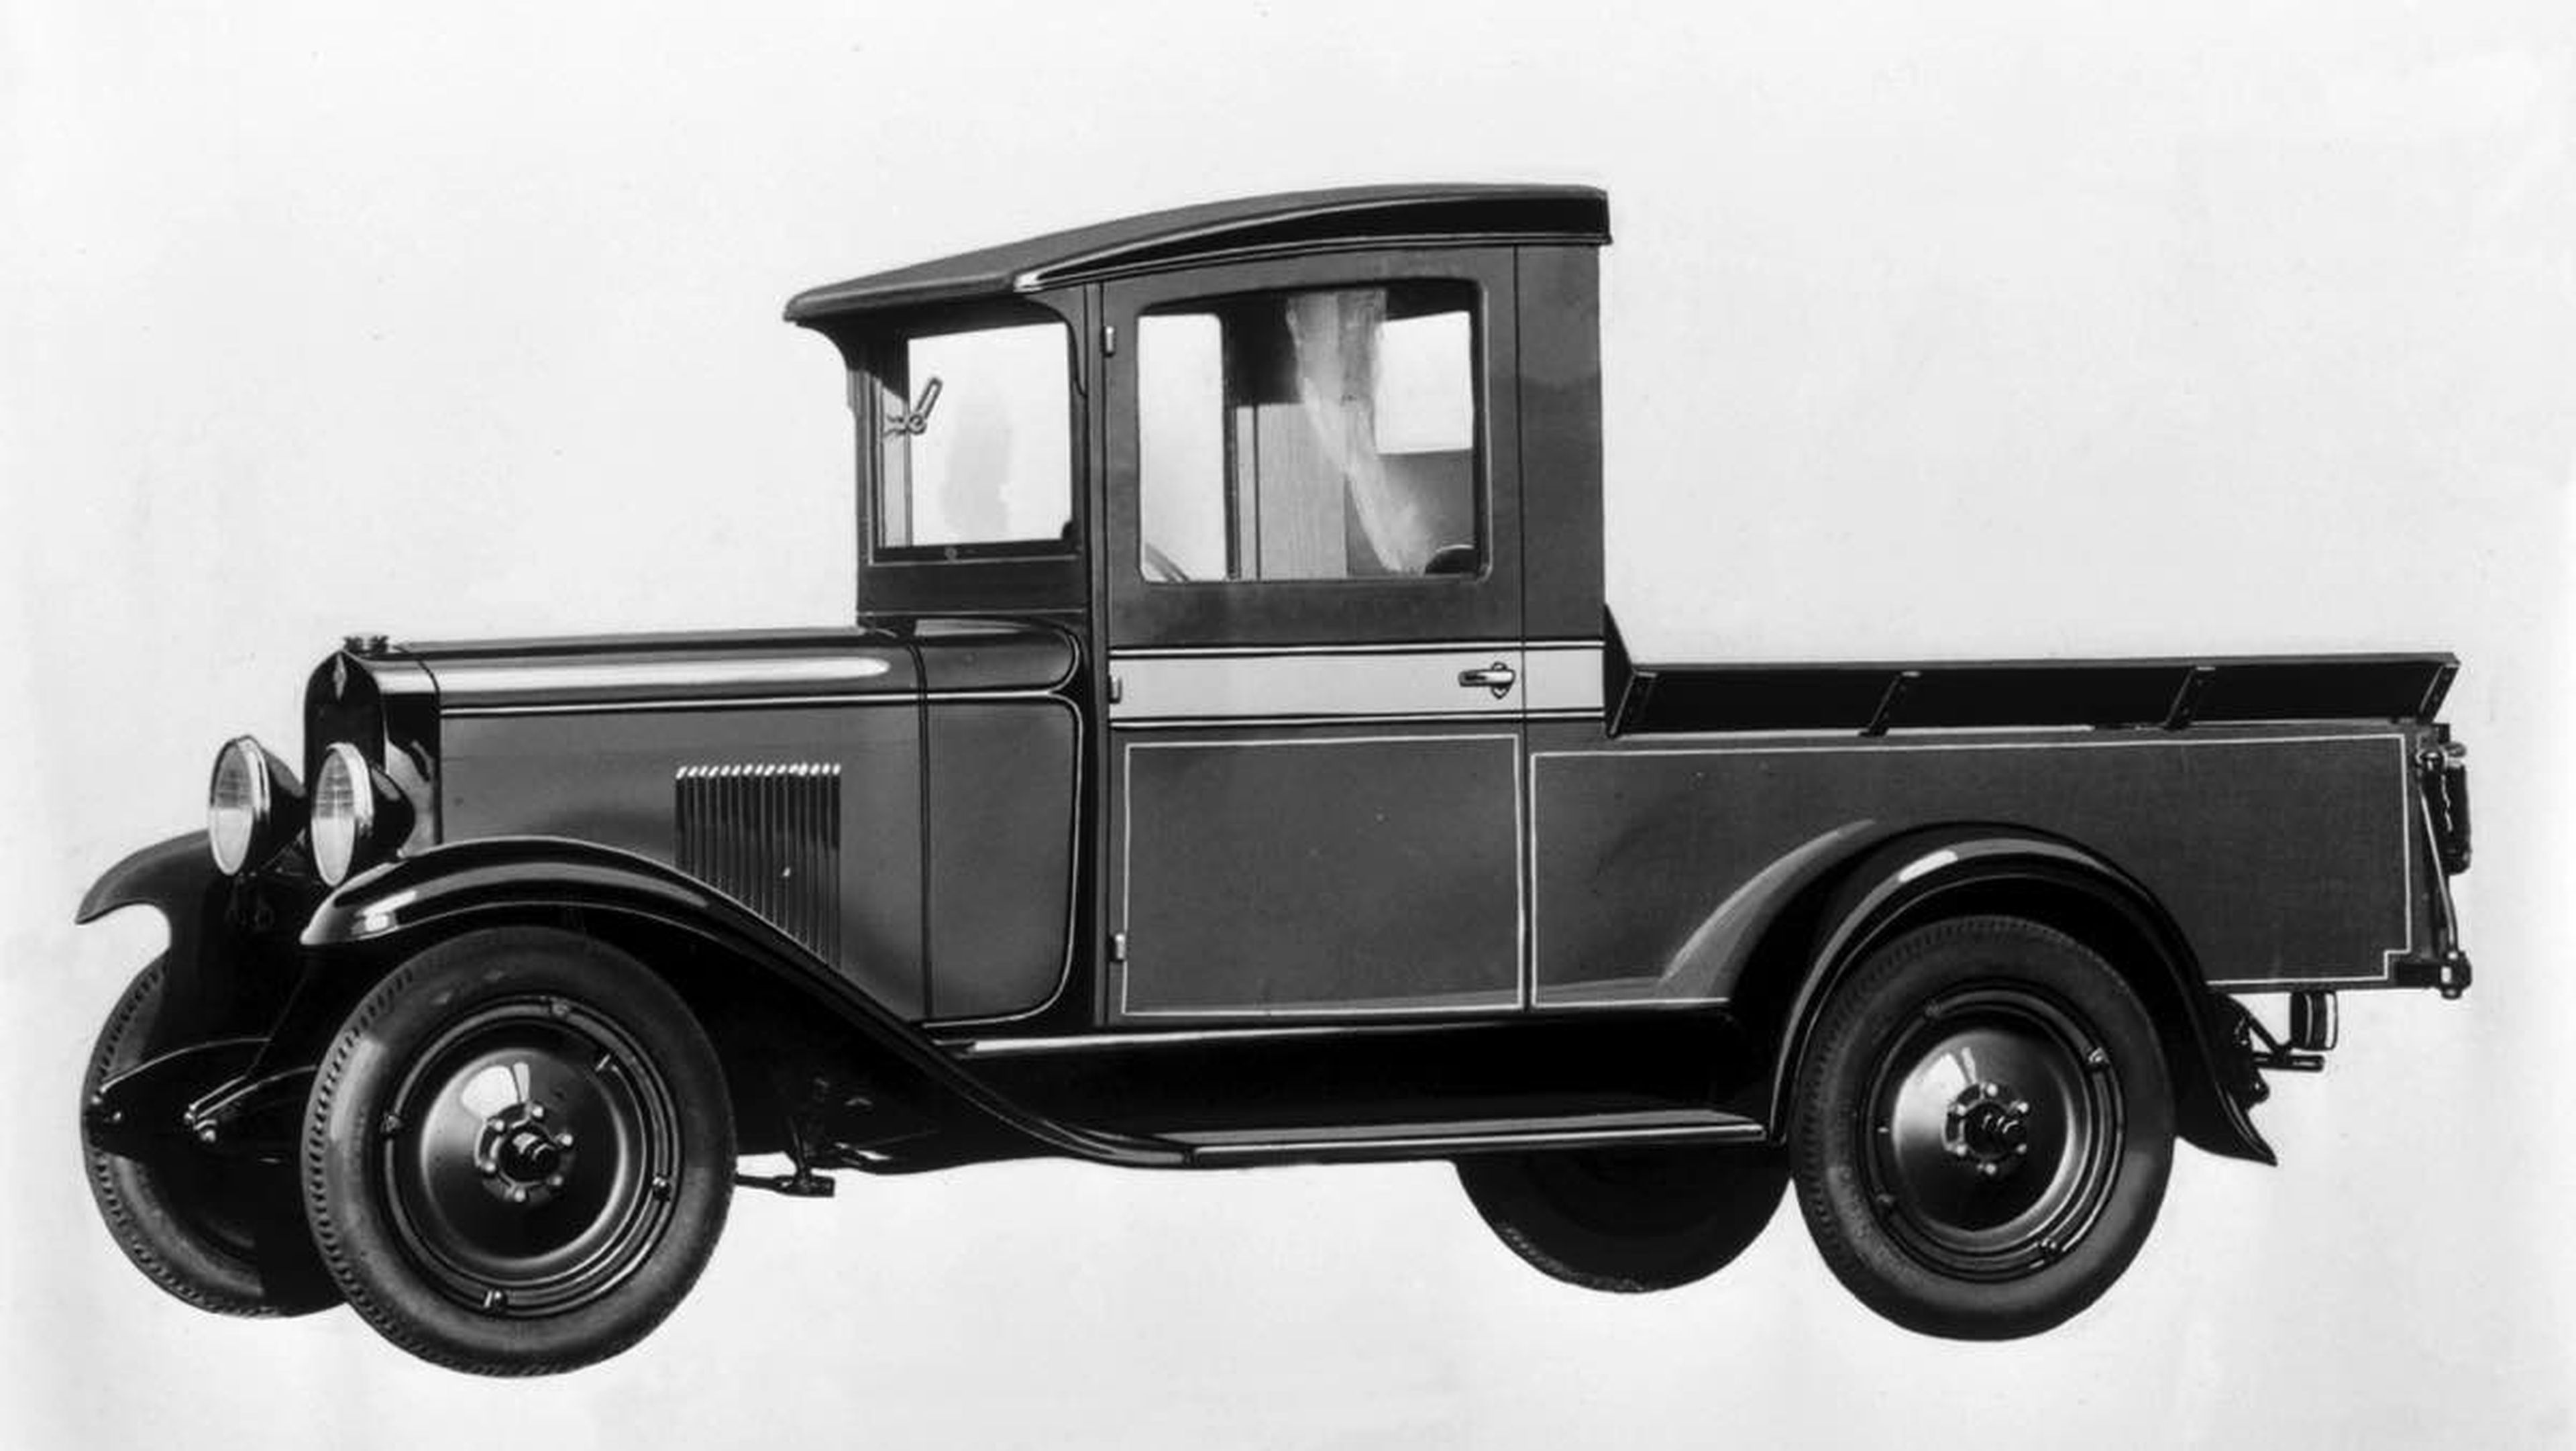 1929 - Chevrolet “Stovebolt” Six